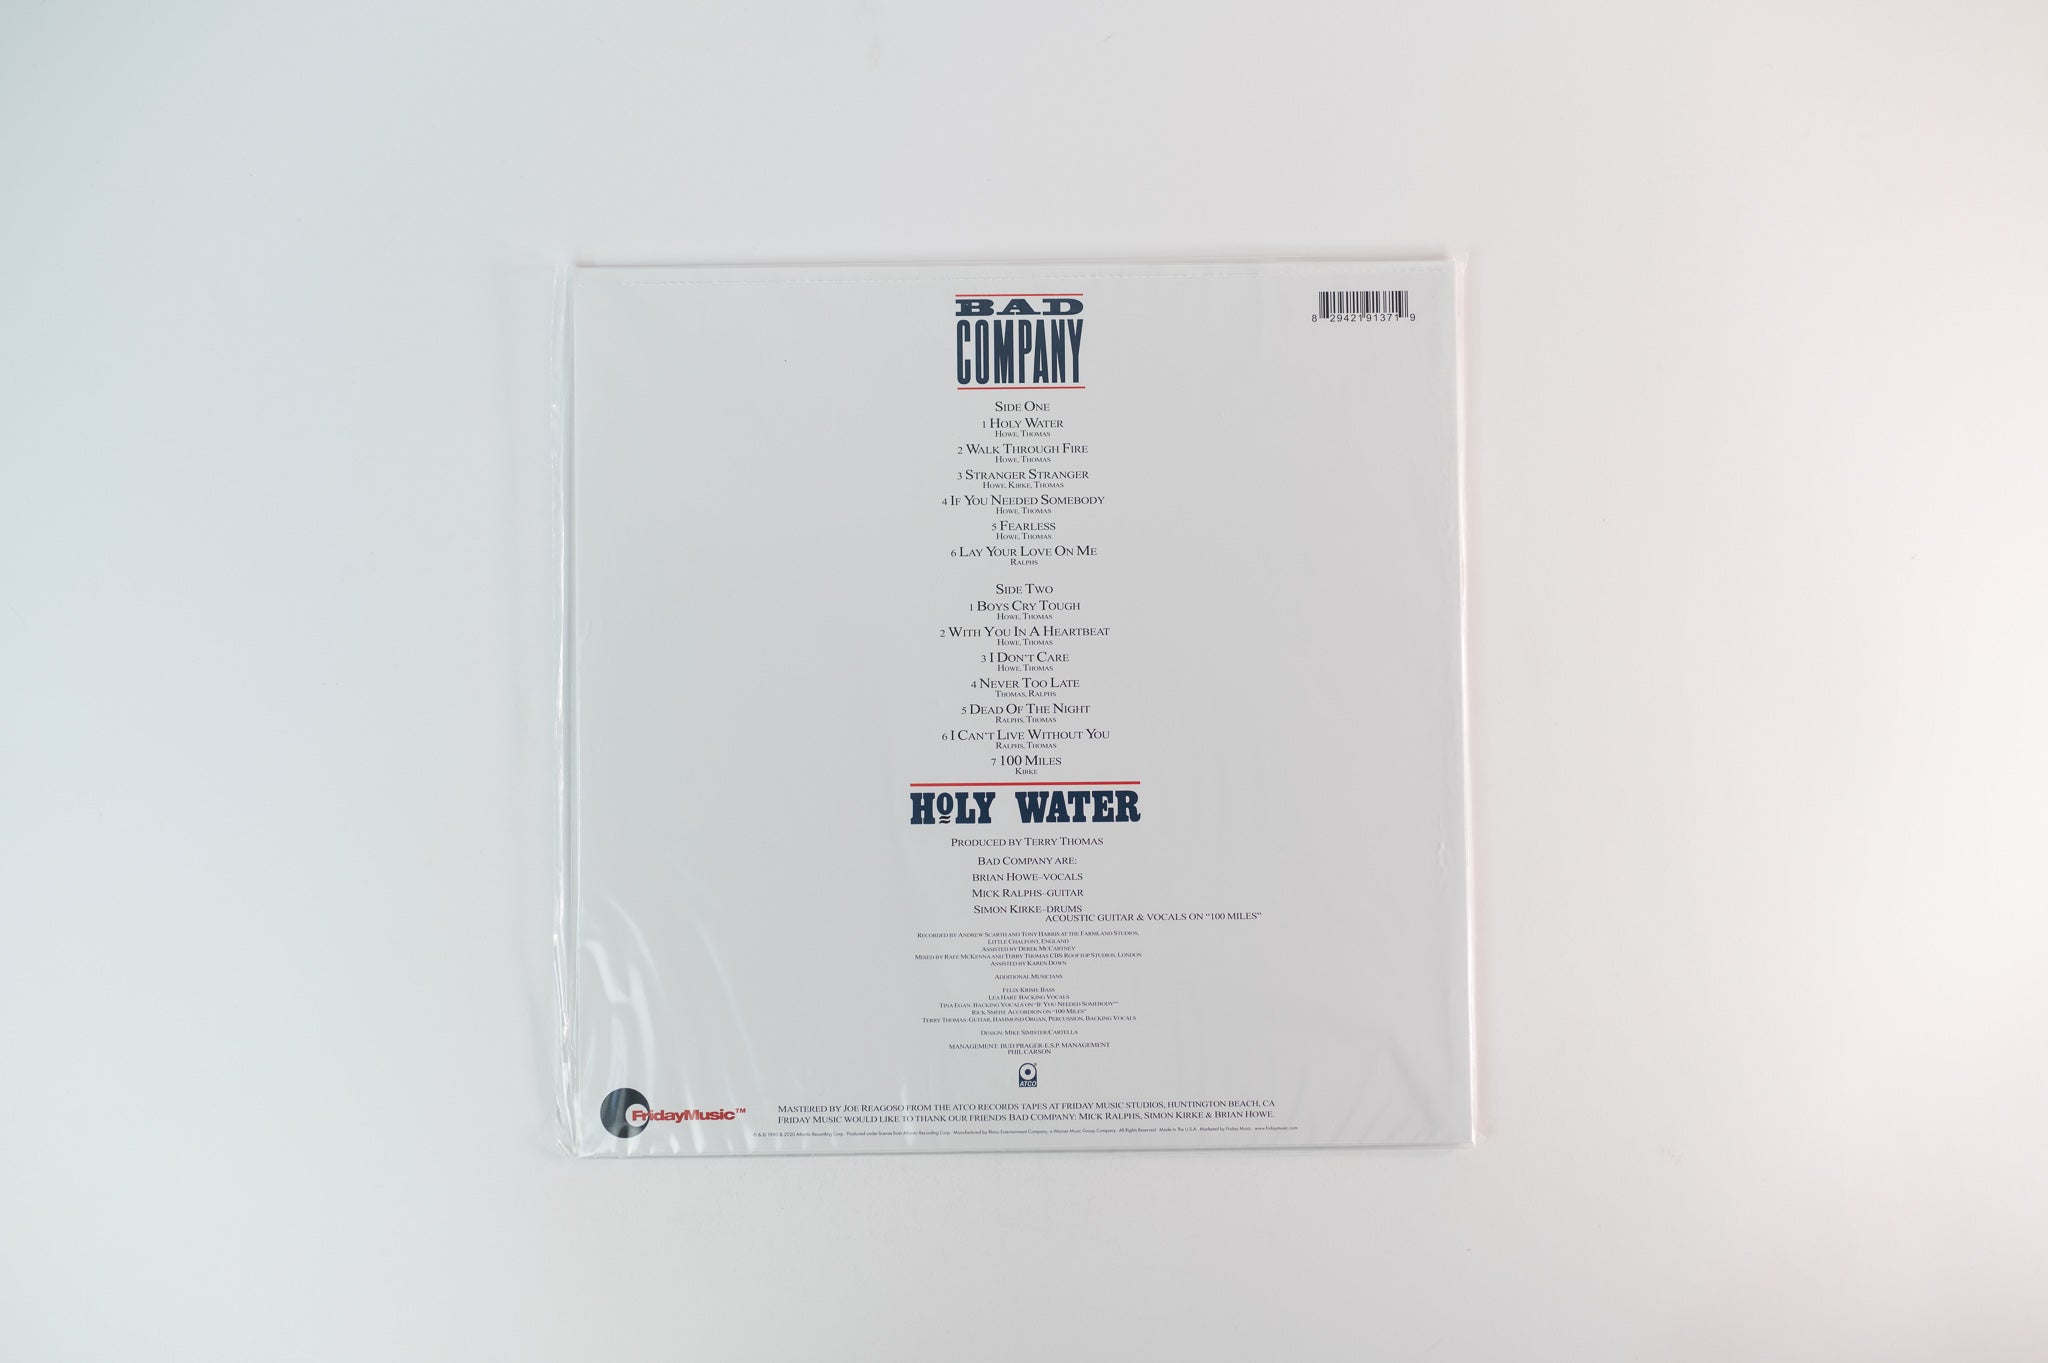 Bad Company - Holy Water on Friday Music -Blue Vinyl Sealed